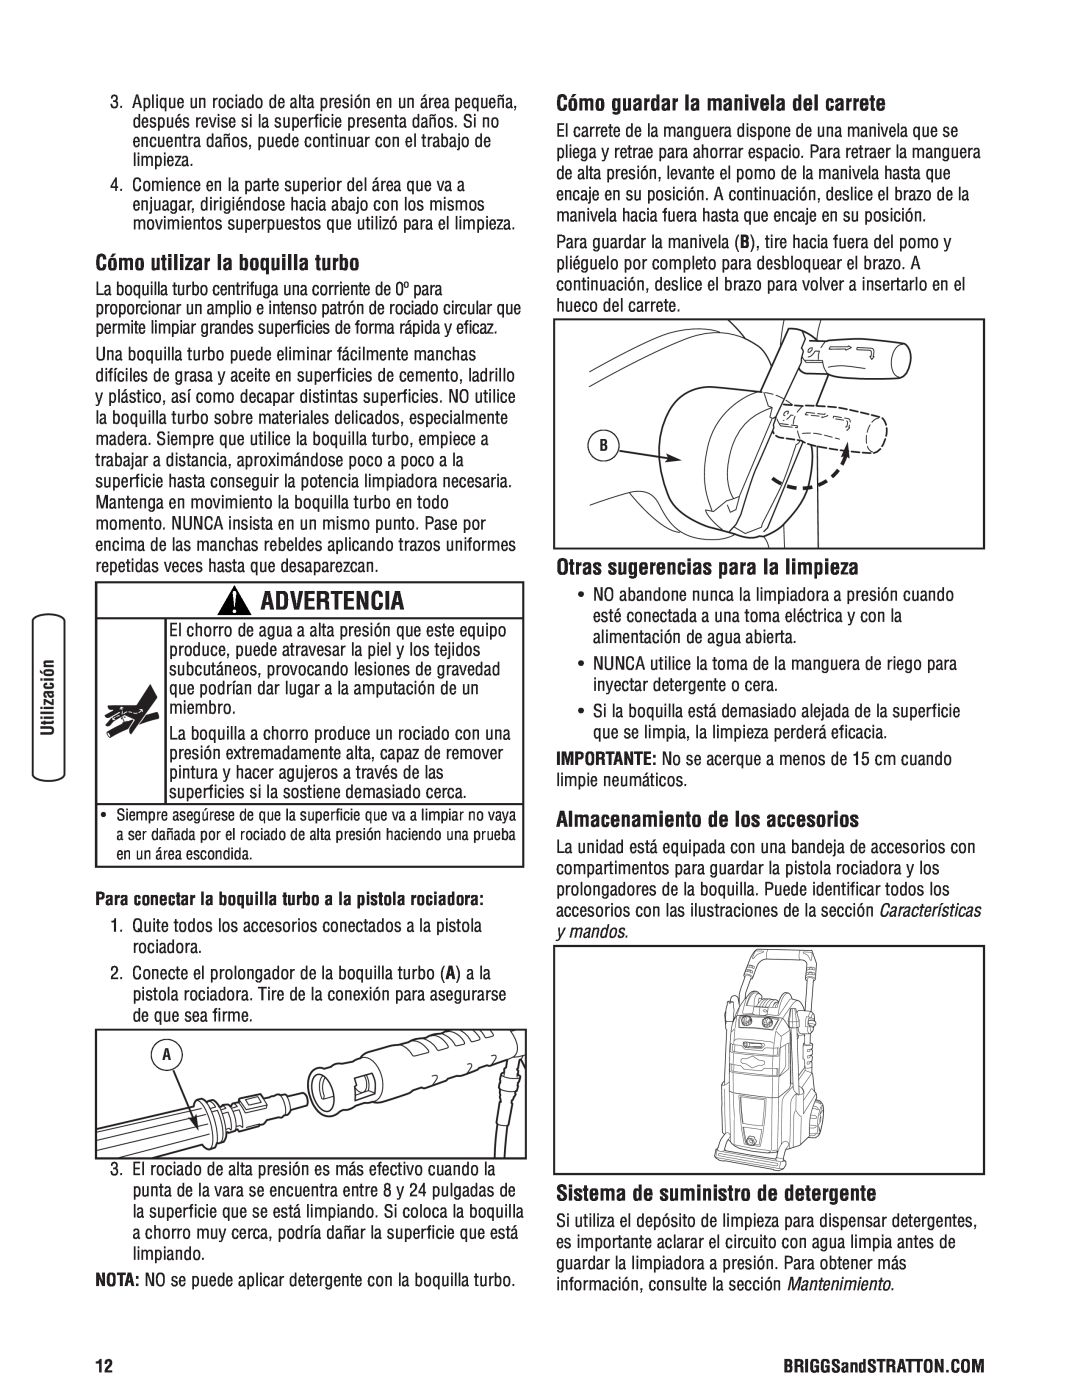 Briggs & Stratton Electric Pressure Washer manual Cómo utilizar la boquilla turbo, Cómo guardar la manivela del carrete 